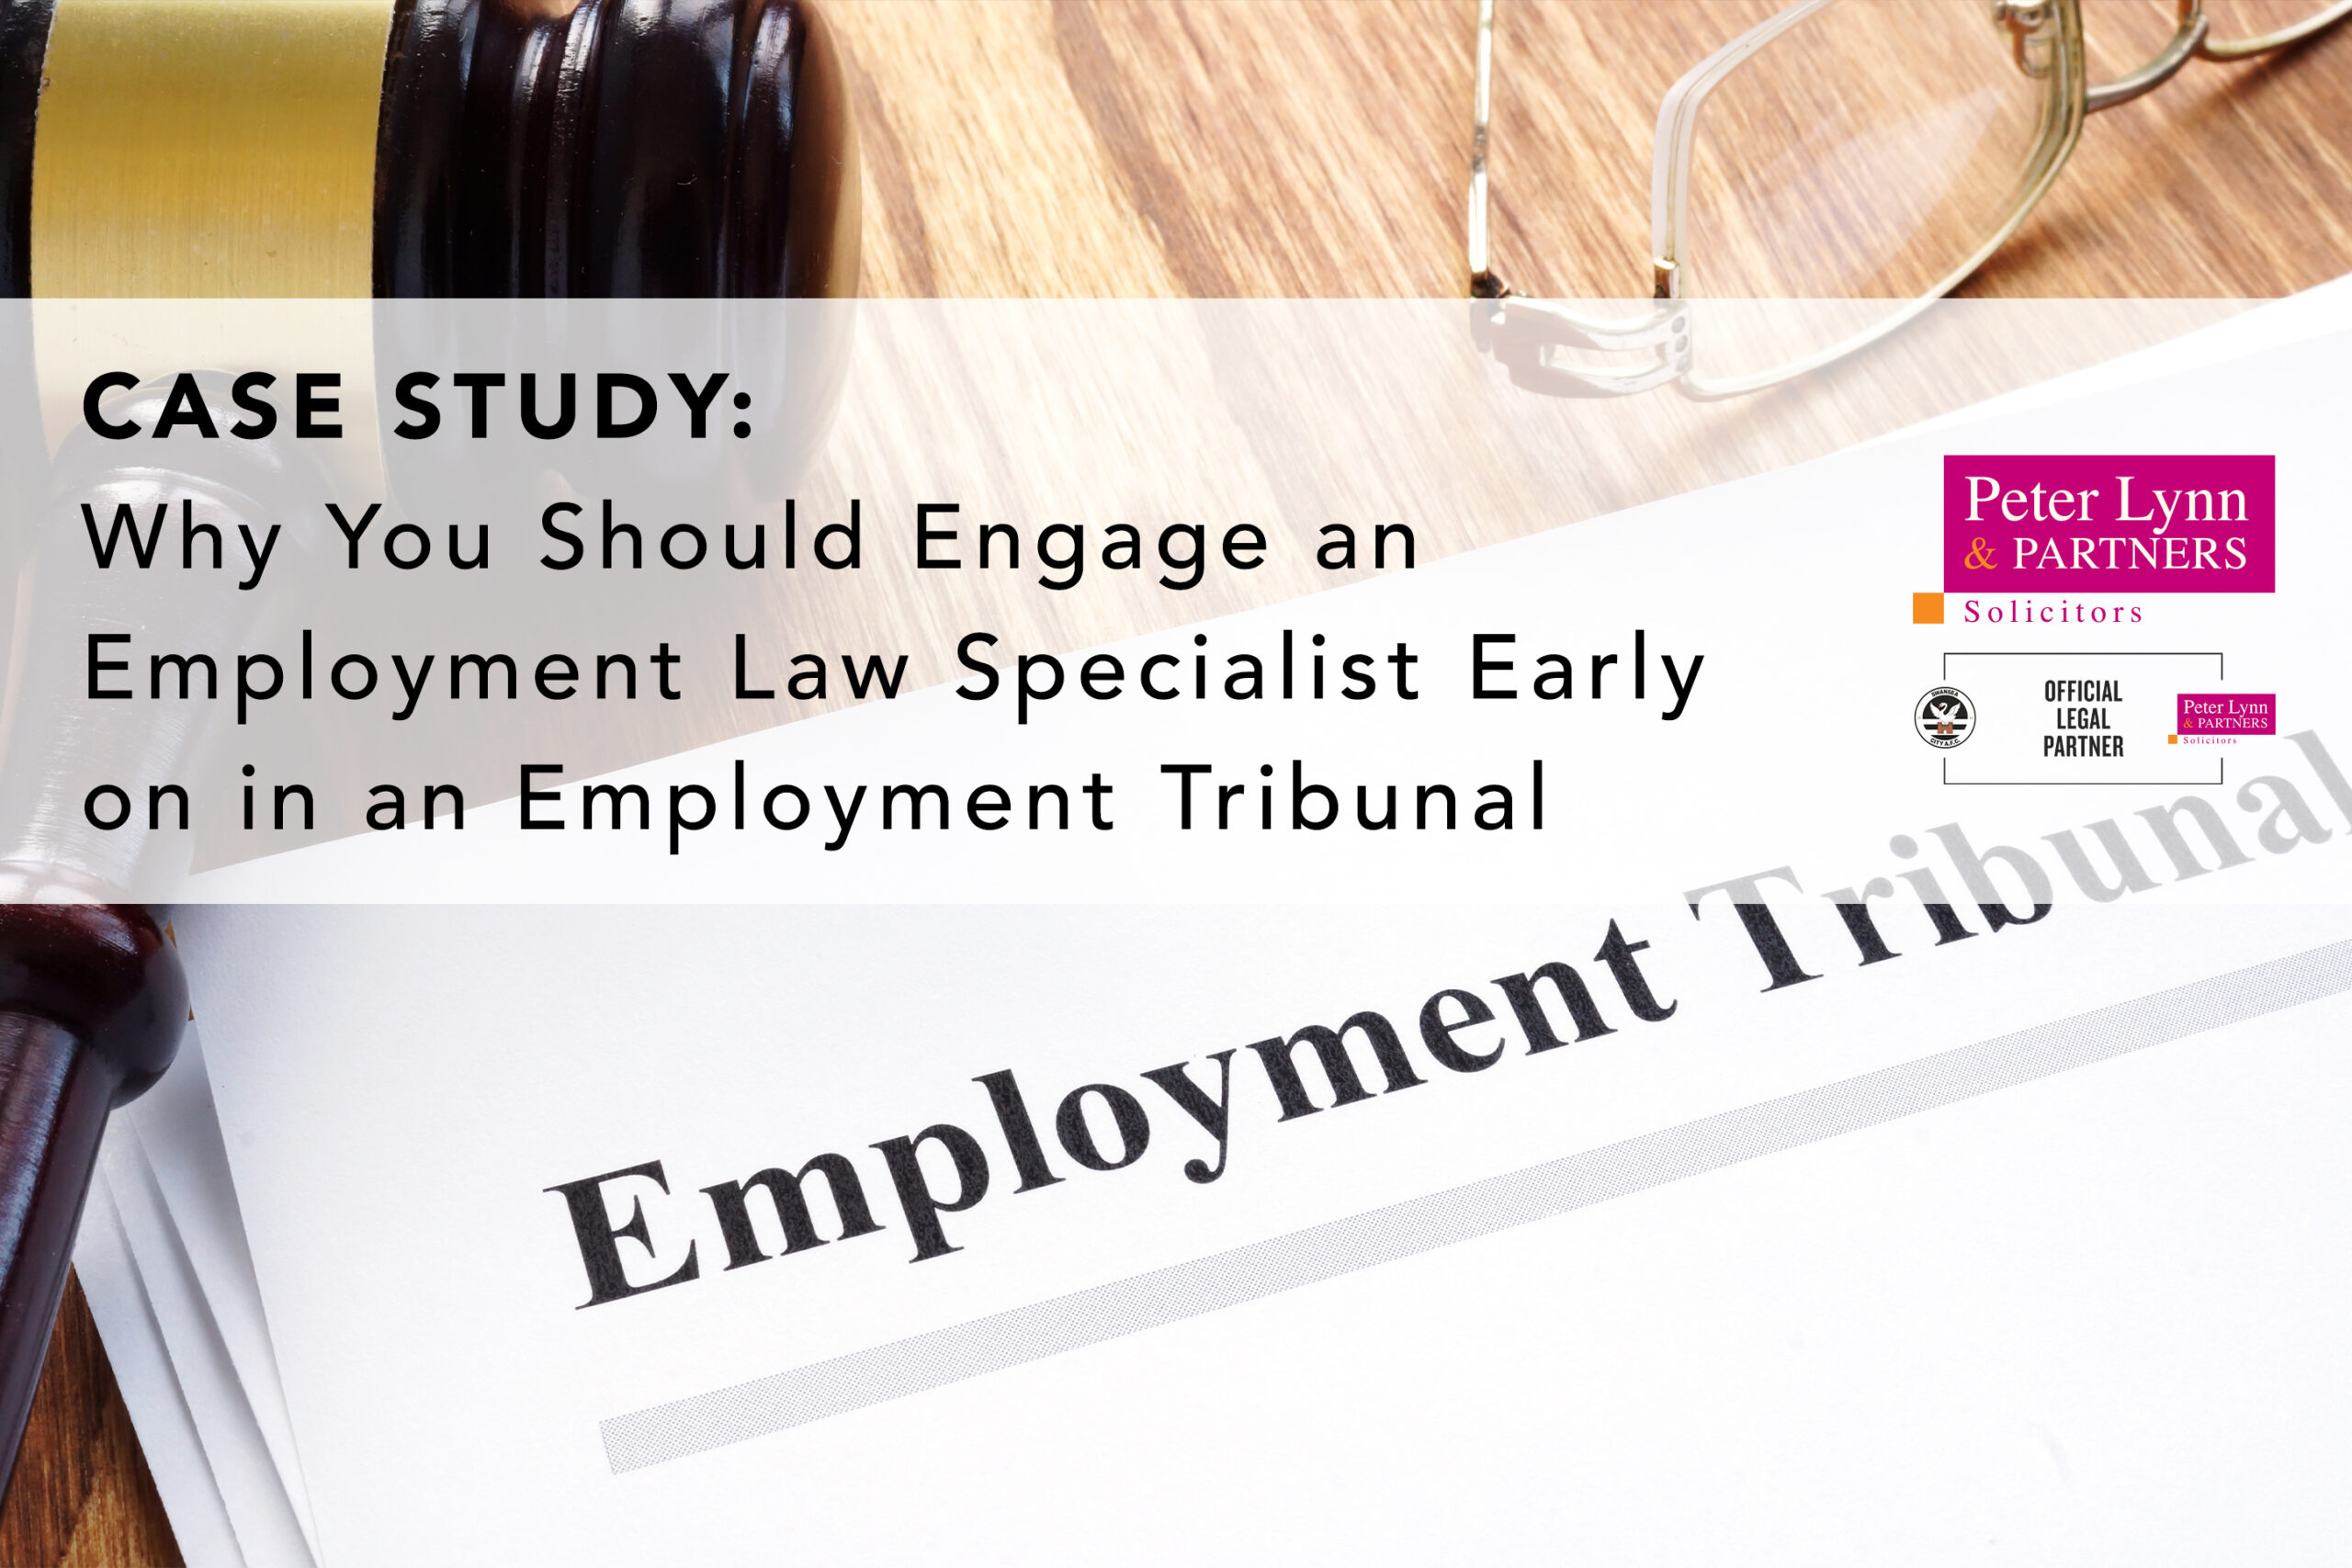 Employment Tribunal